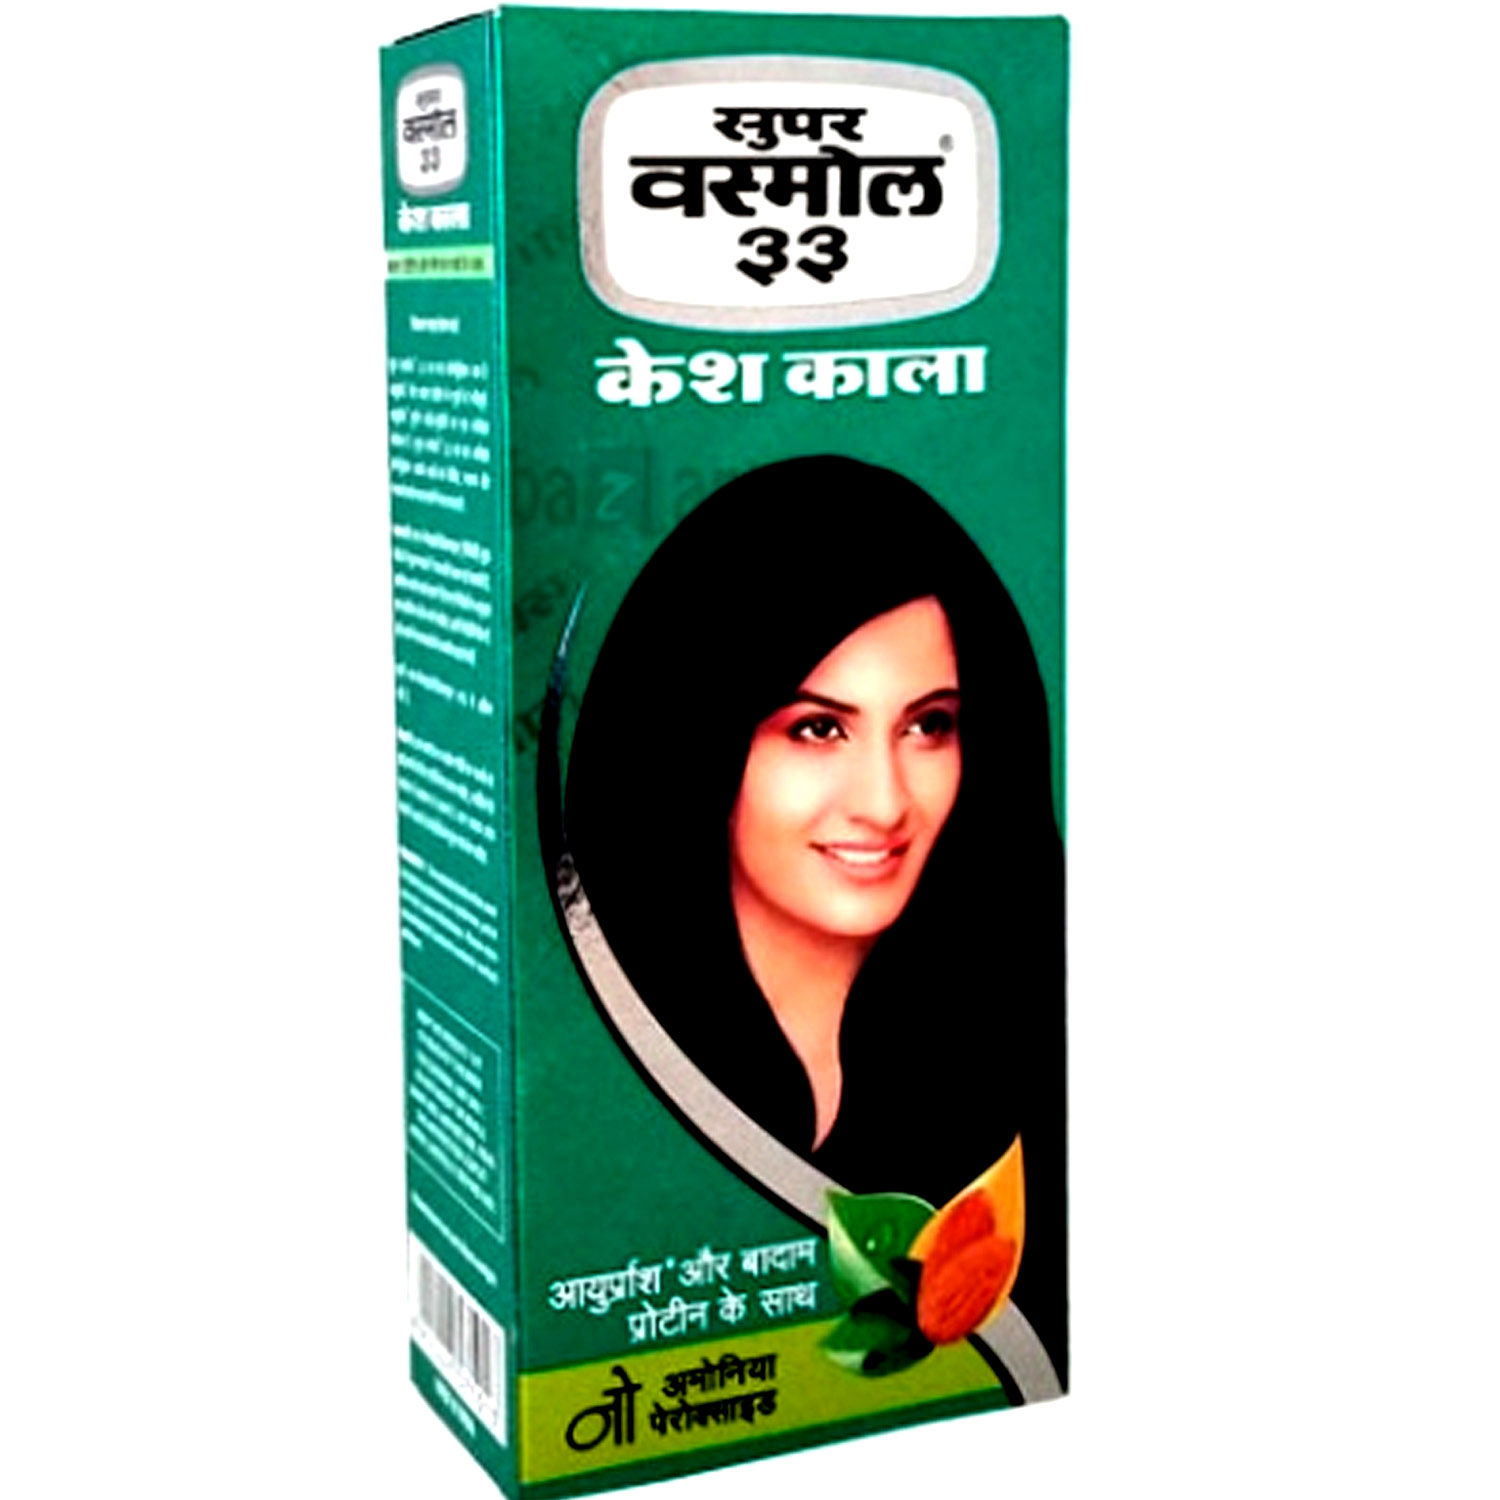 Super Vasmol 33 Kesh Kala Hair Oil, 100 ml Price, Uses, Side Effects,  Composition - Apollo Pharmacy